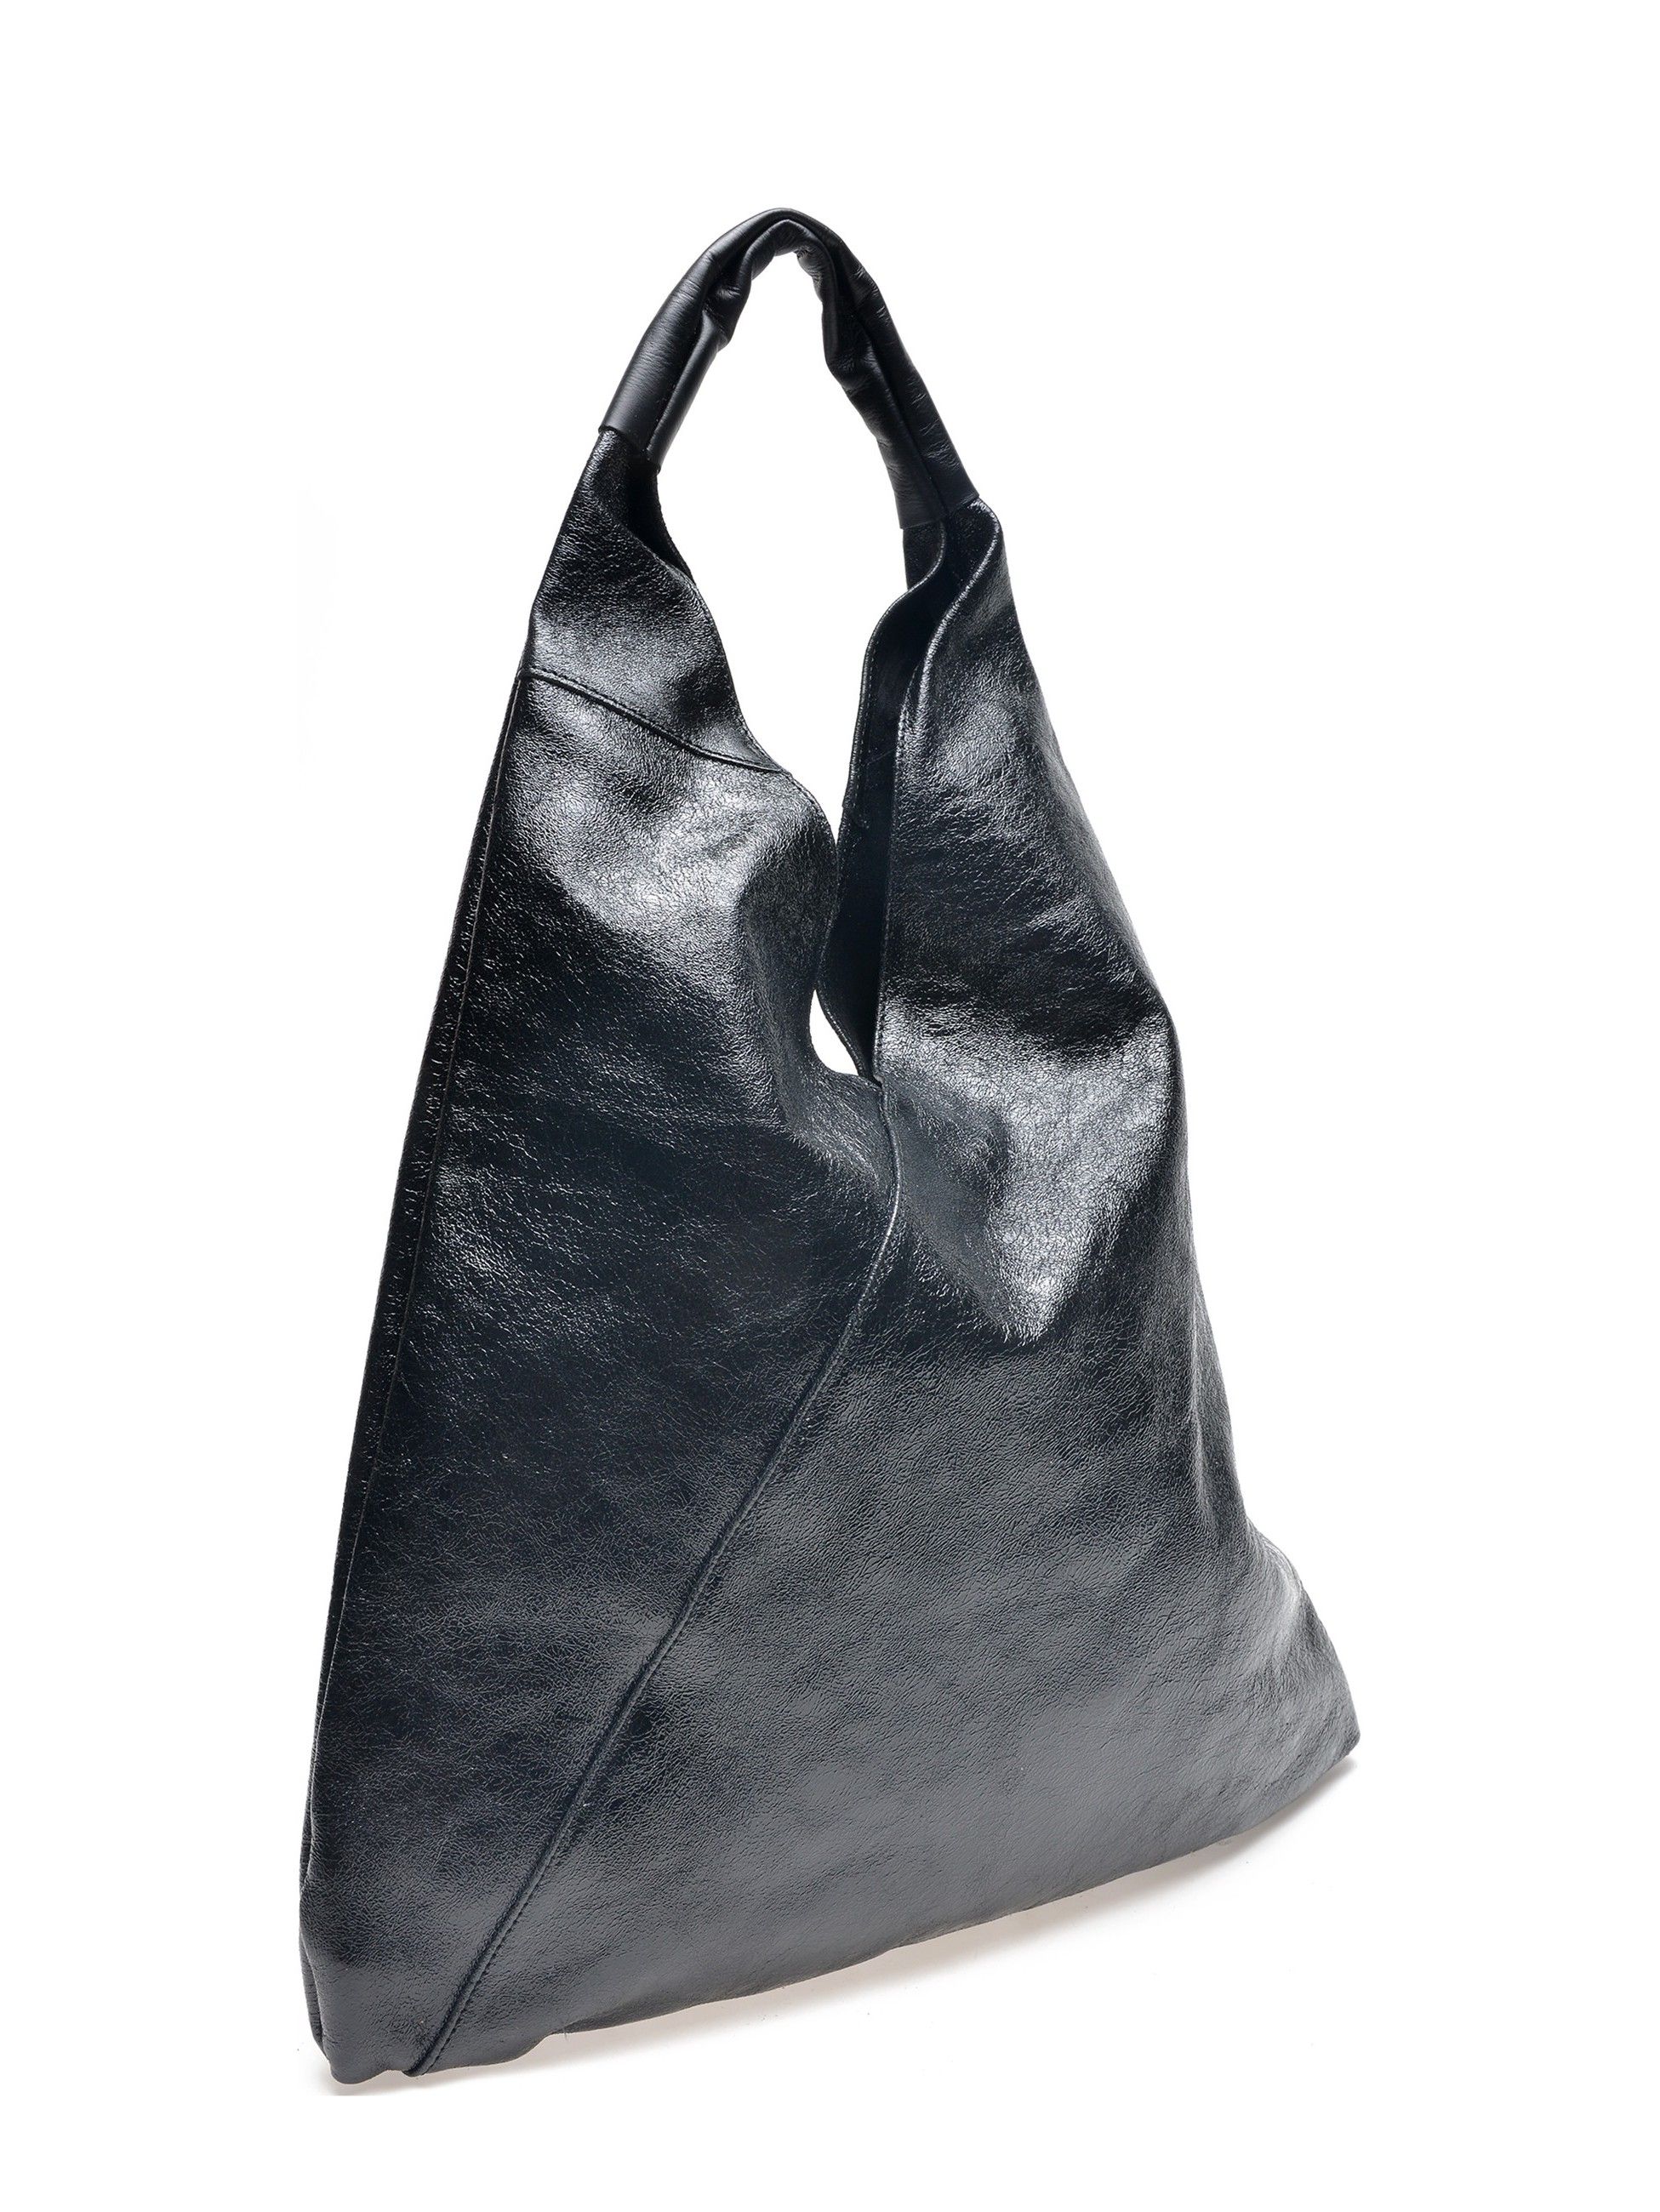 Shopper bag
100% cow leather
Single top handle: 26 cm
Internal wallet with zip closure 
Dimensions: 37x46x/ cm